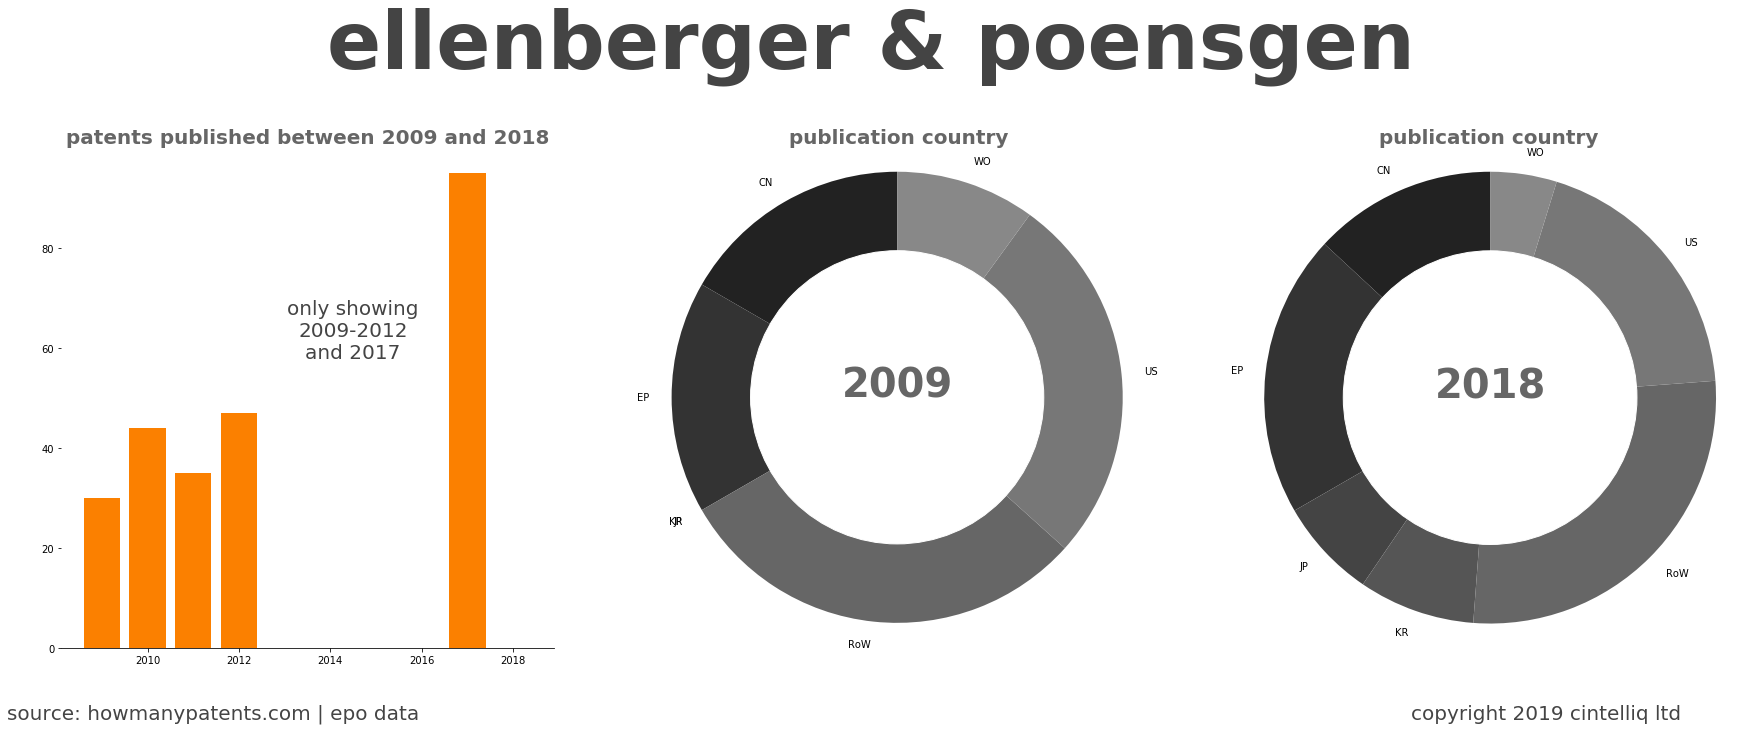 summary of patents for Ellenberger & Poensgen